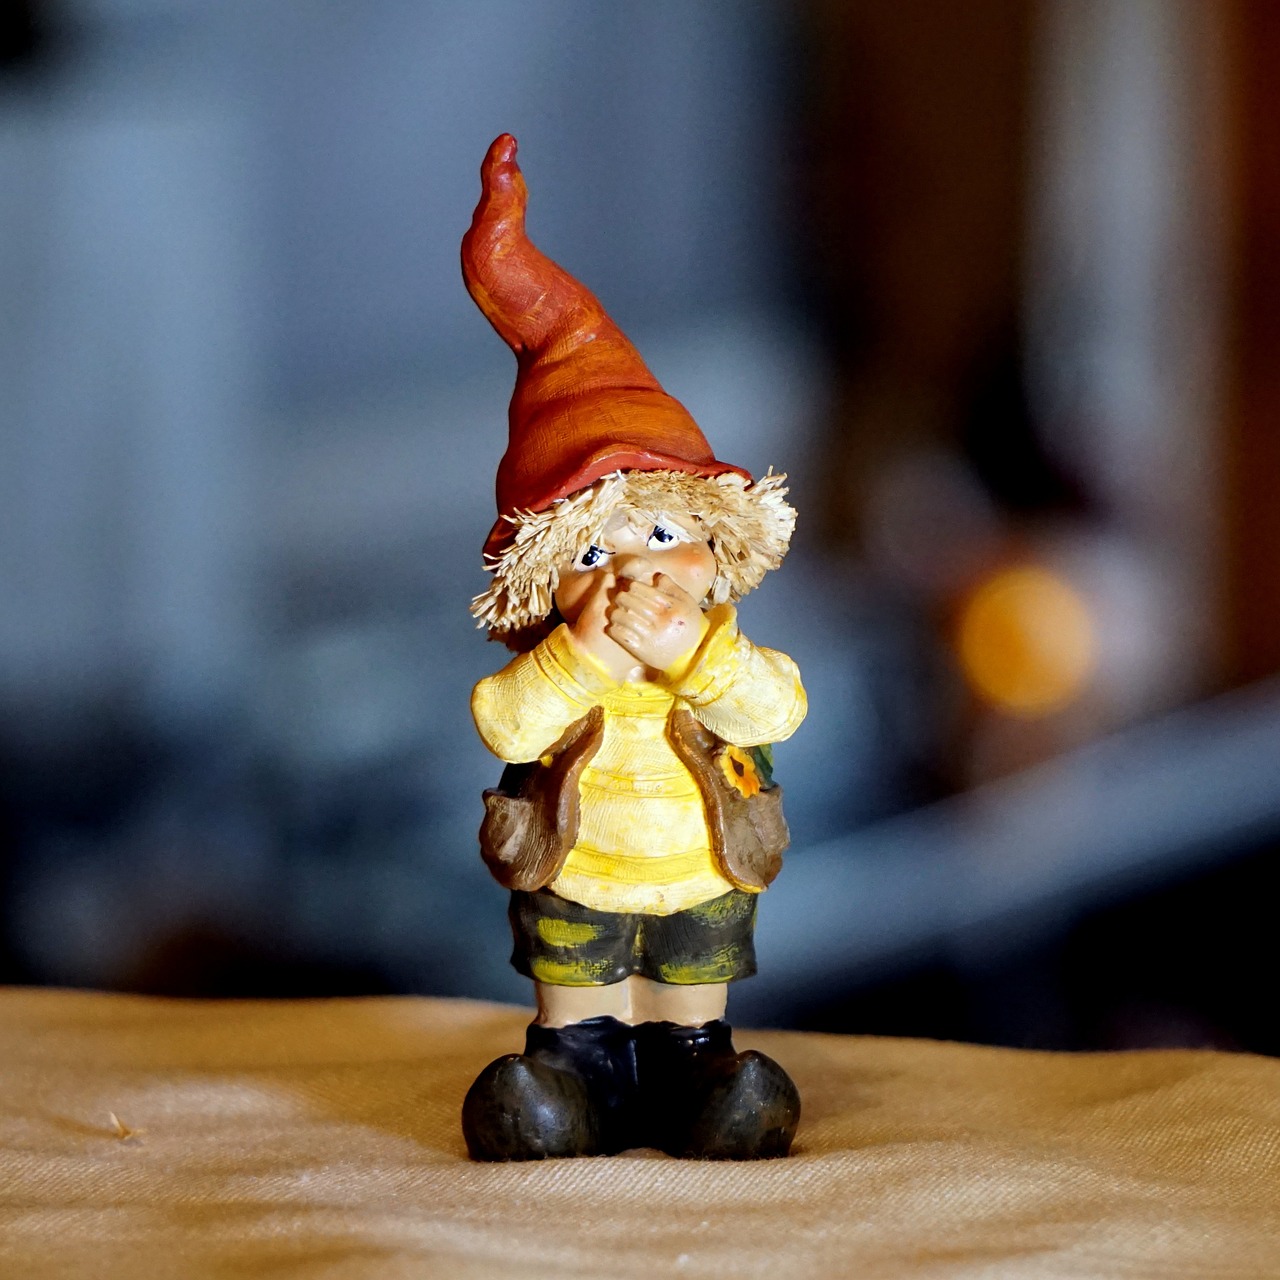 dwarf figure decoration free photo